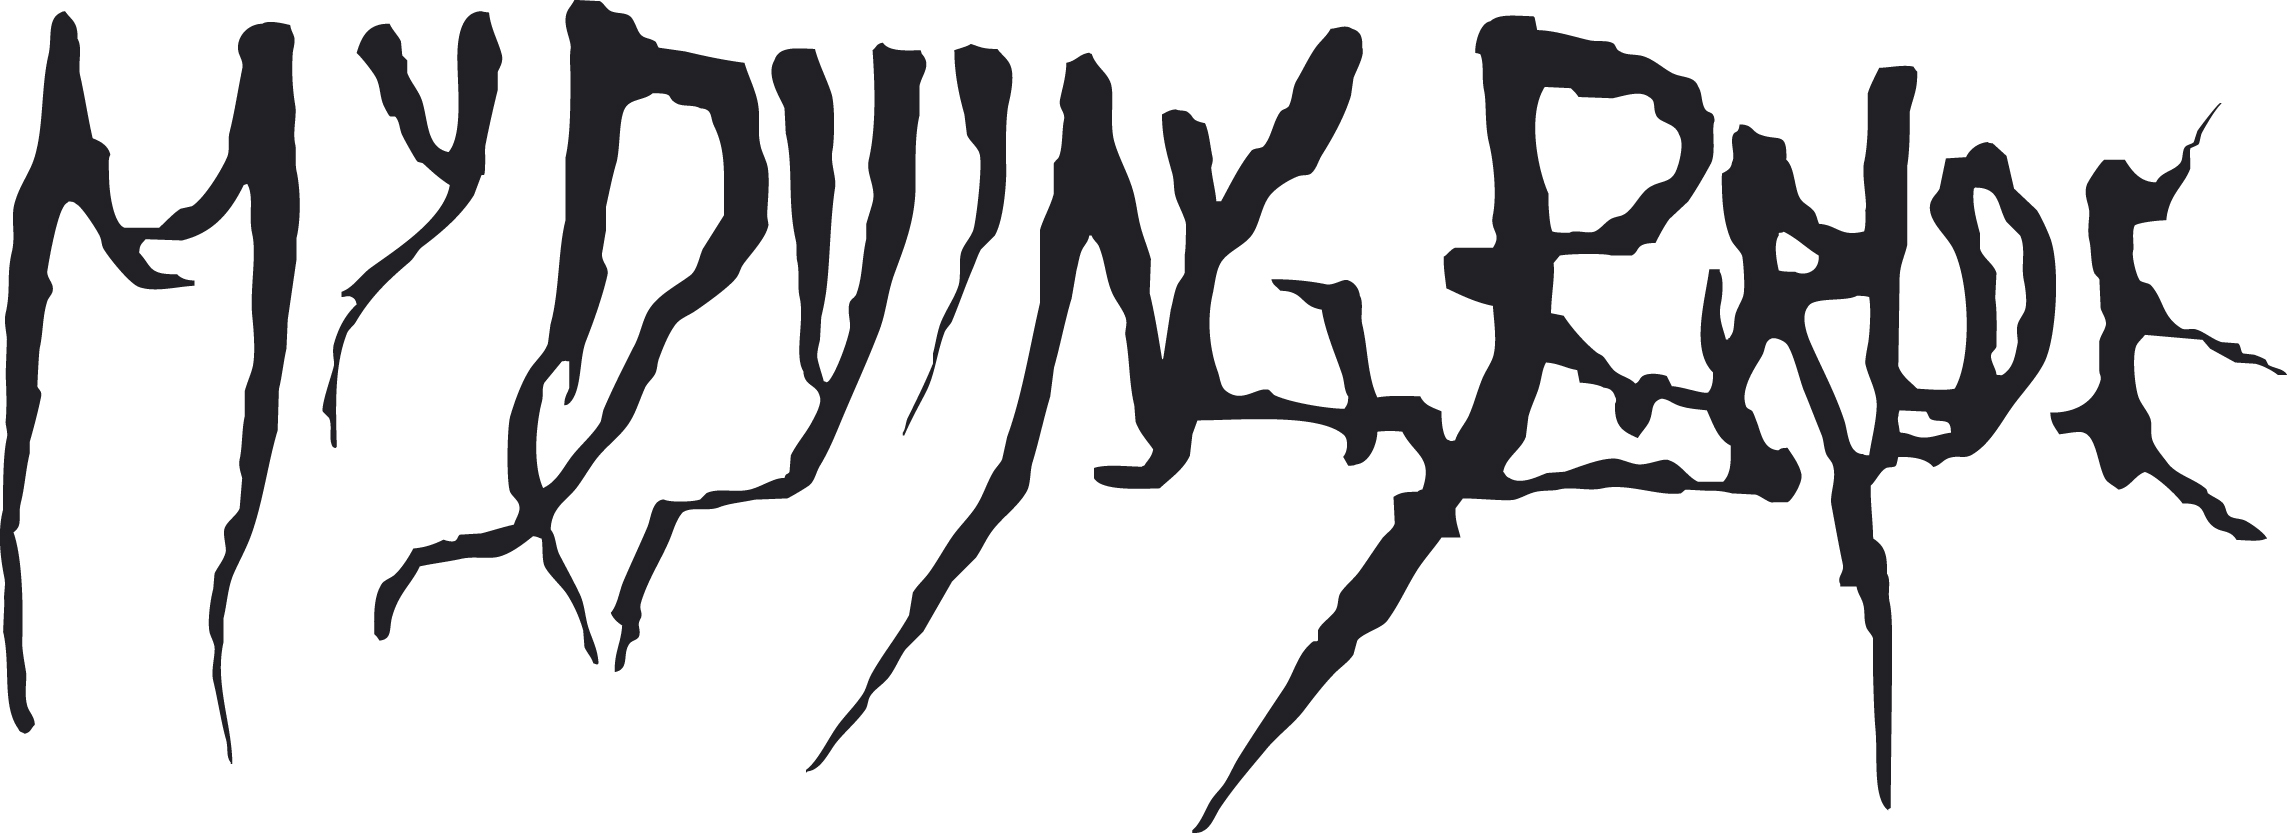 Logo My Dying Bride